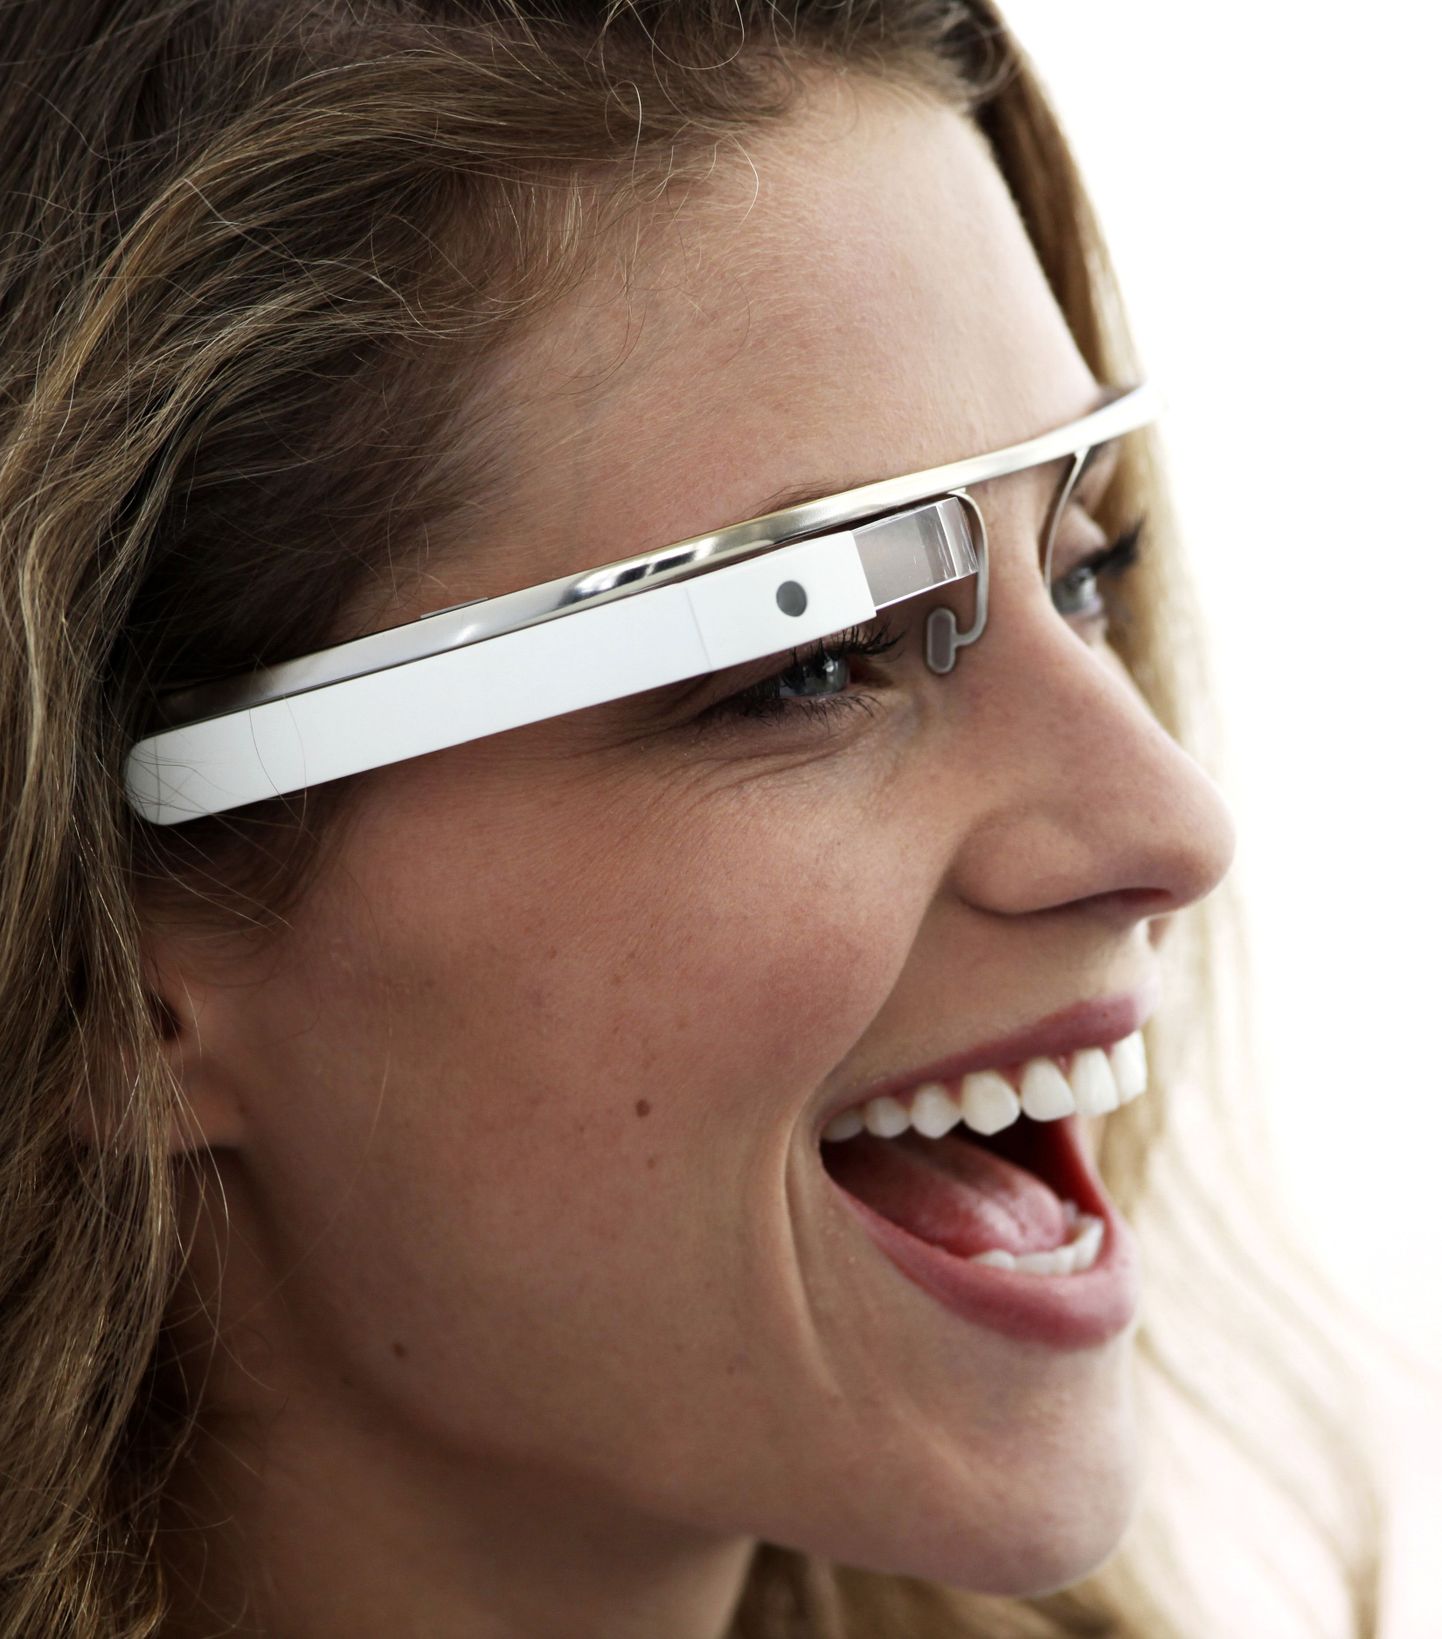 "Google Glasses".